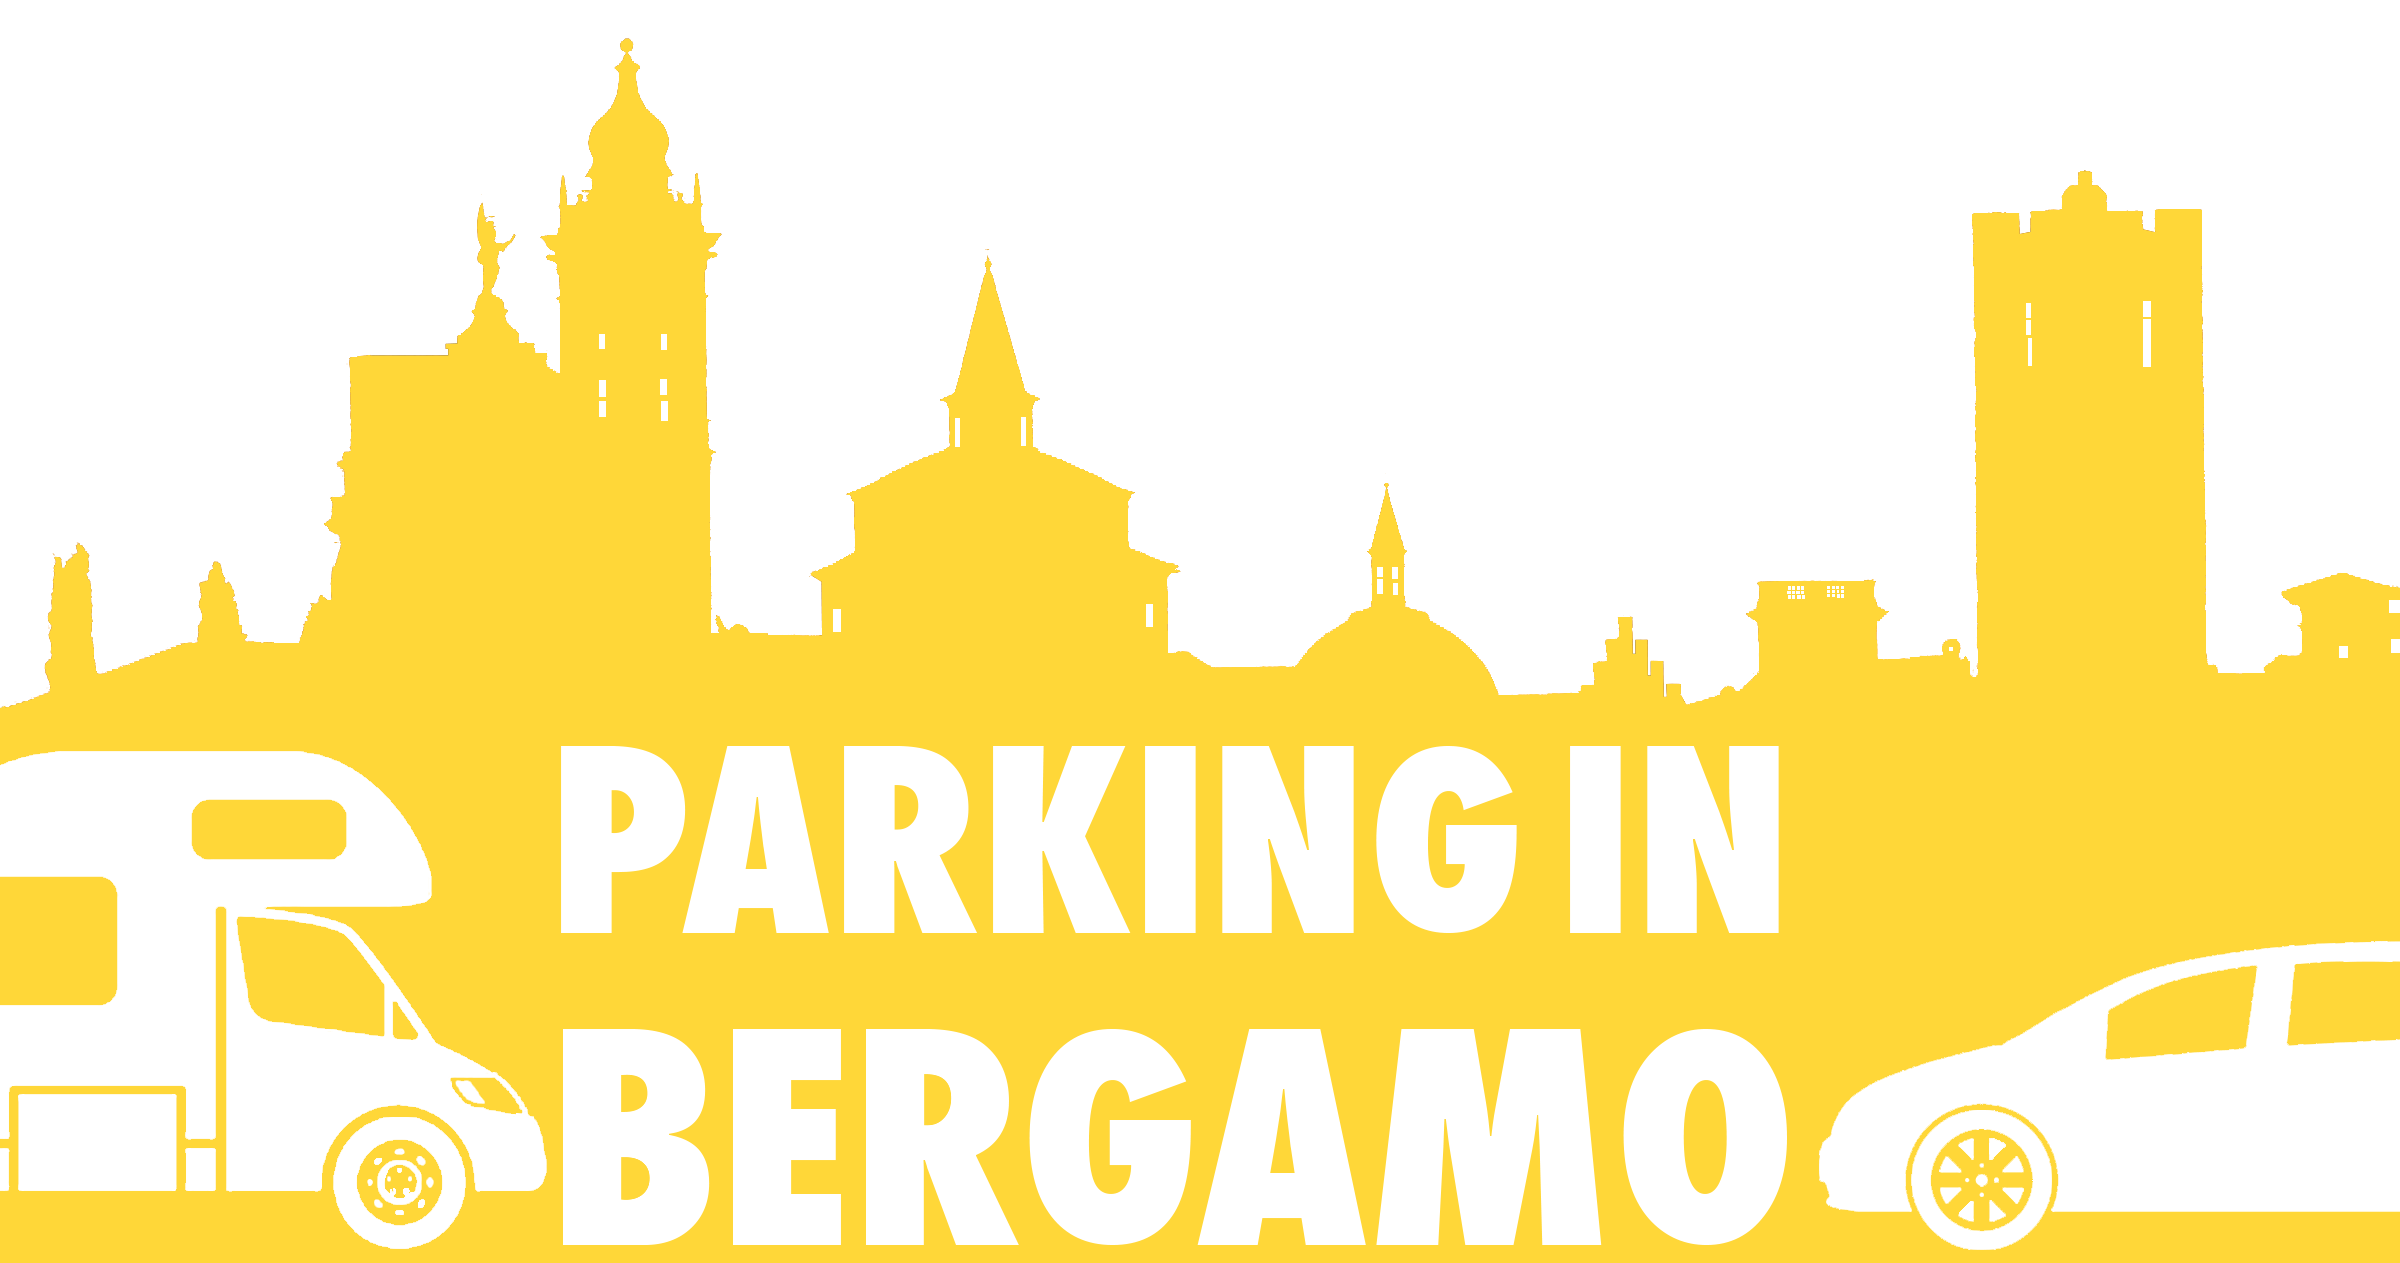 Parking in Bergamo